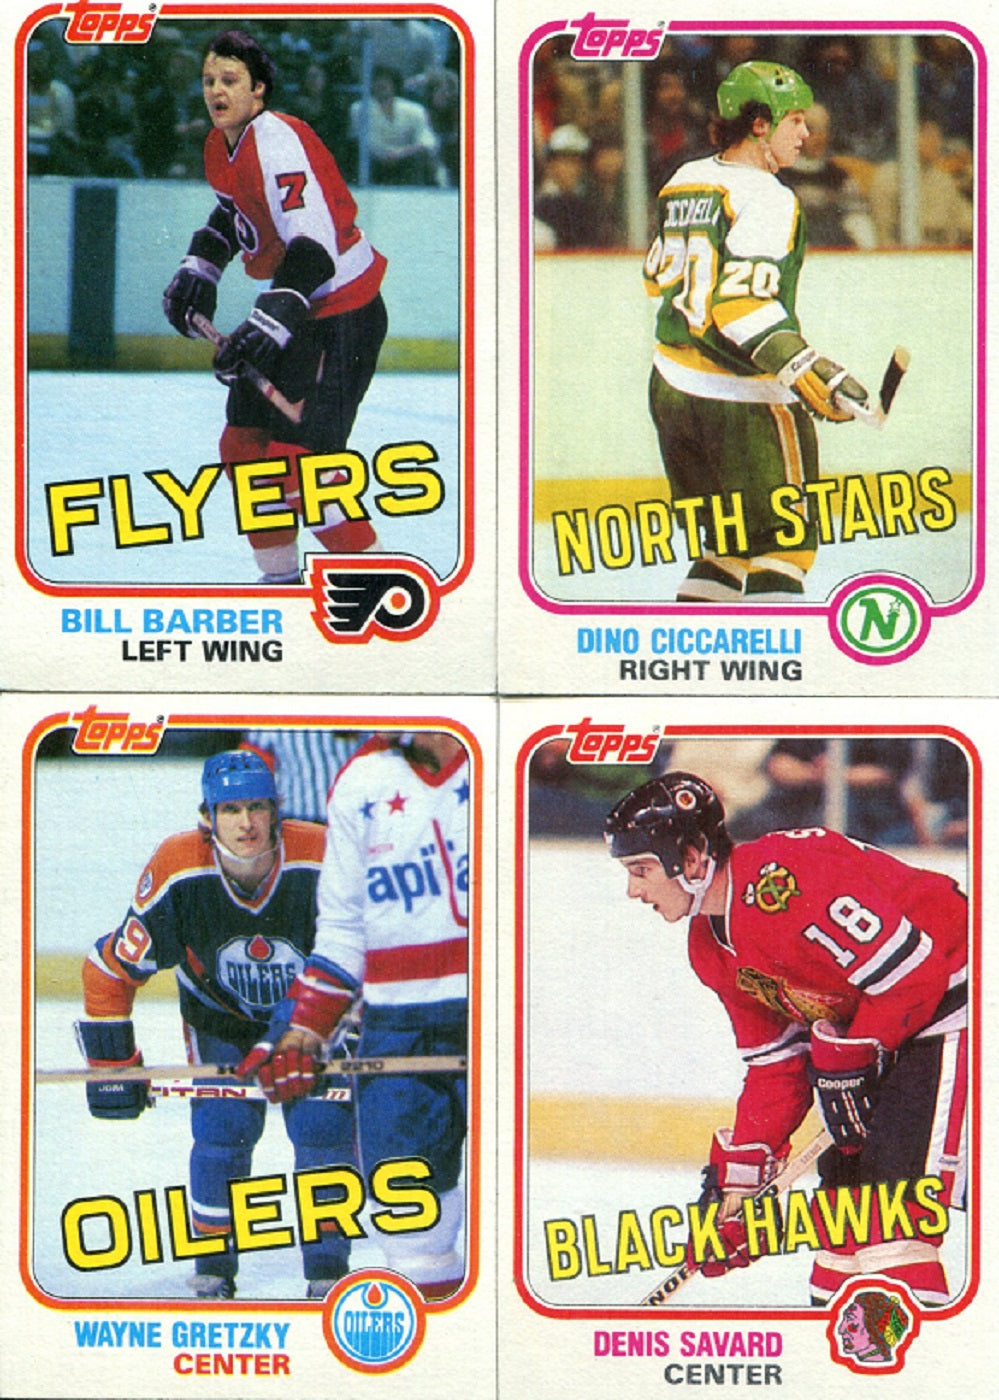 1981/82 Topps Hockey Complete Set EX/MT NM (198) (23-122)